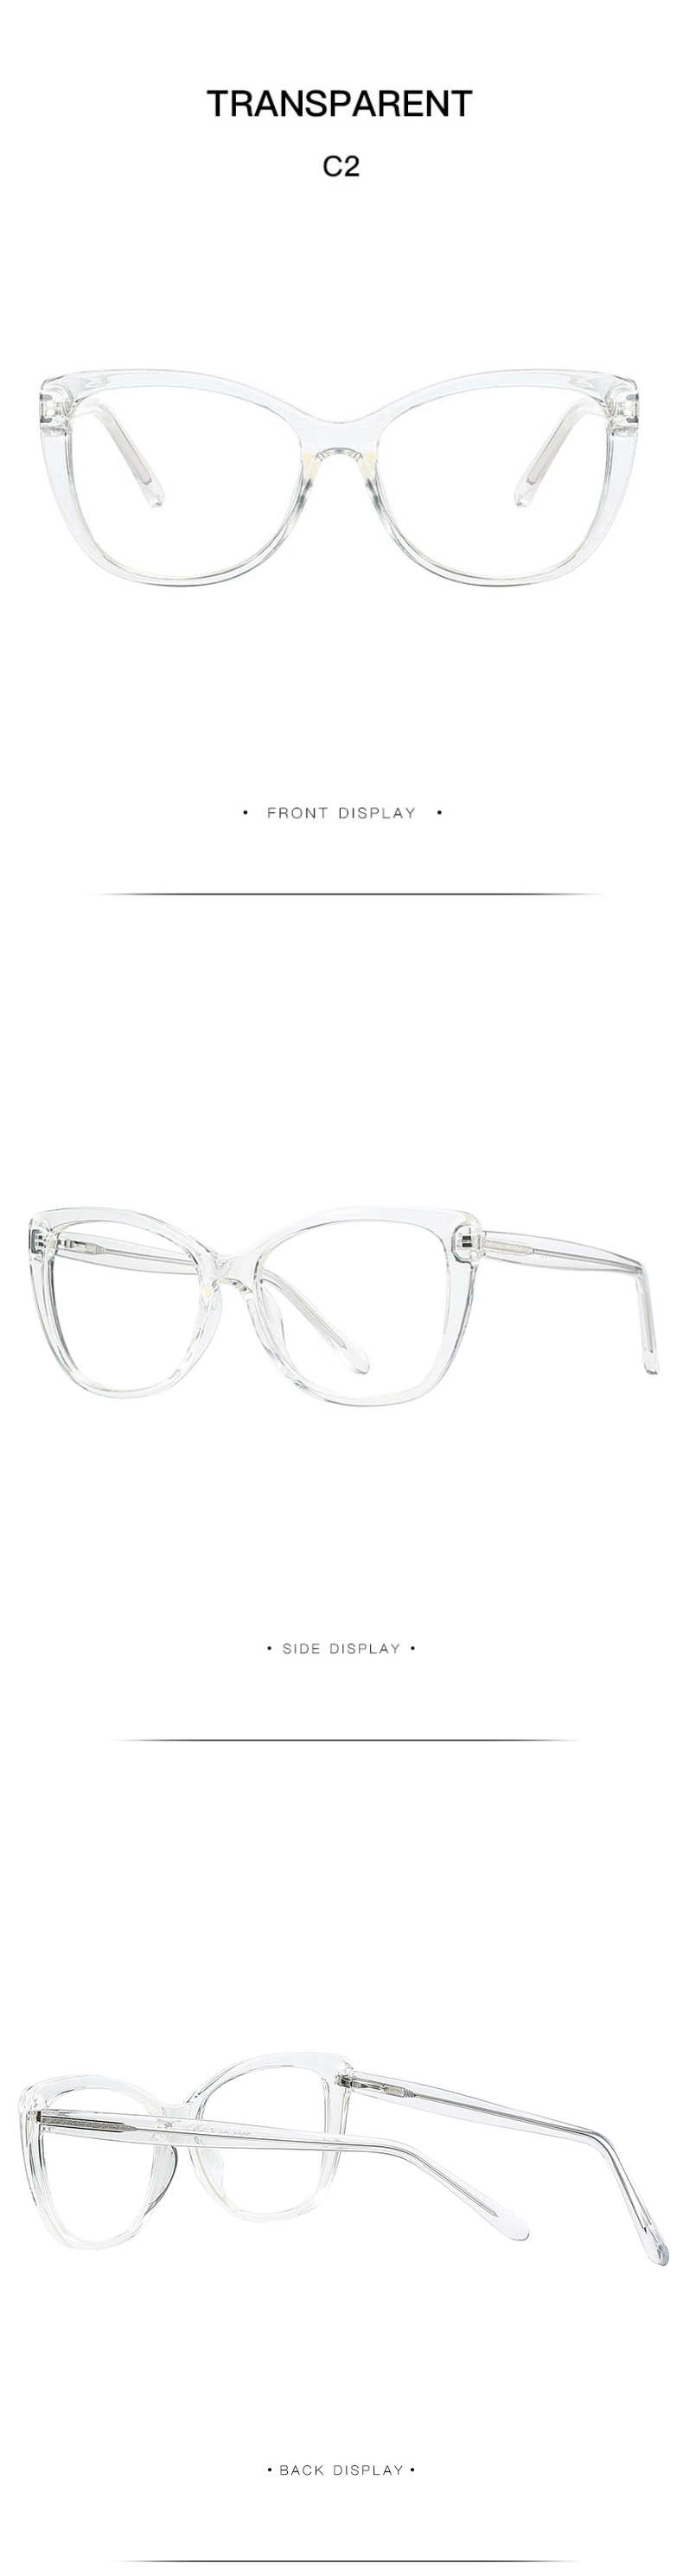 New Model Fashion Vintage Cat Eye Reading Glasses Optical Frame Anti Blue Light Blocking Computer Women Men Glasses